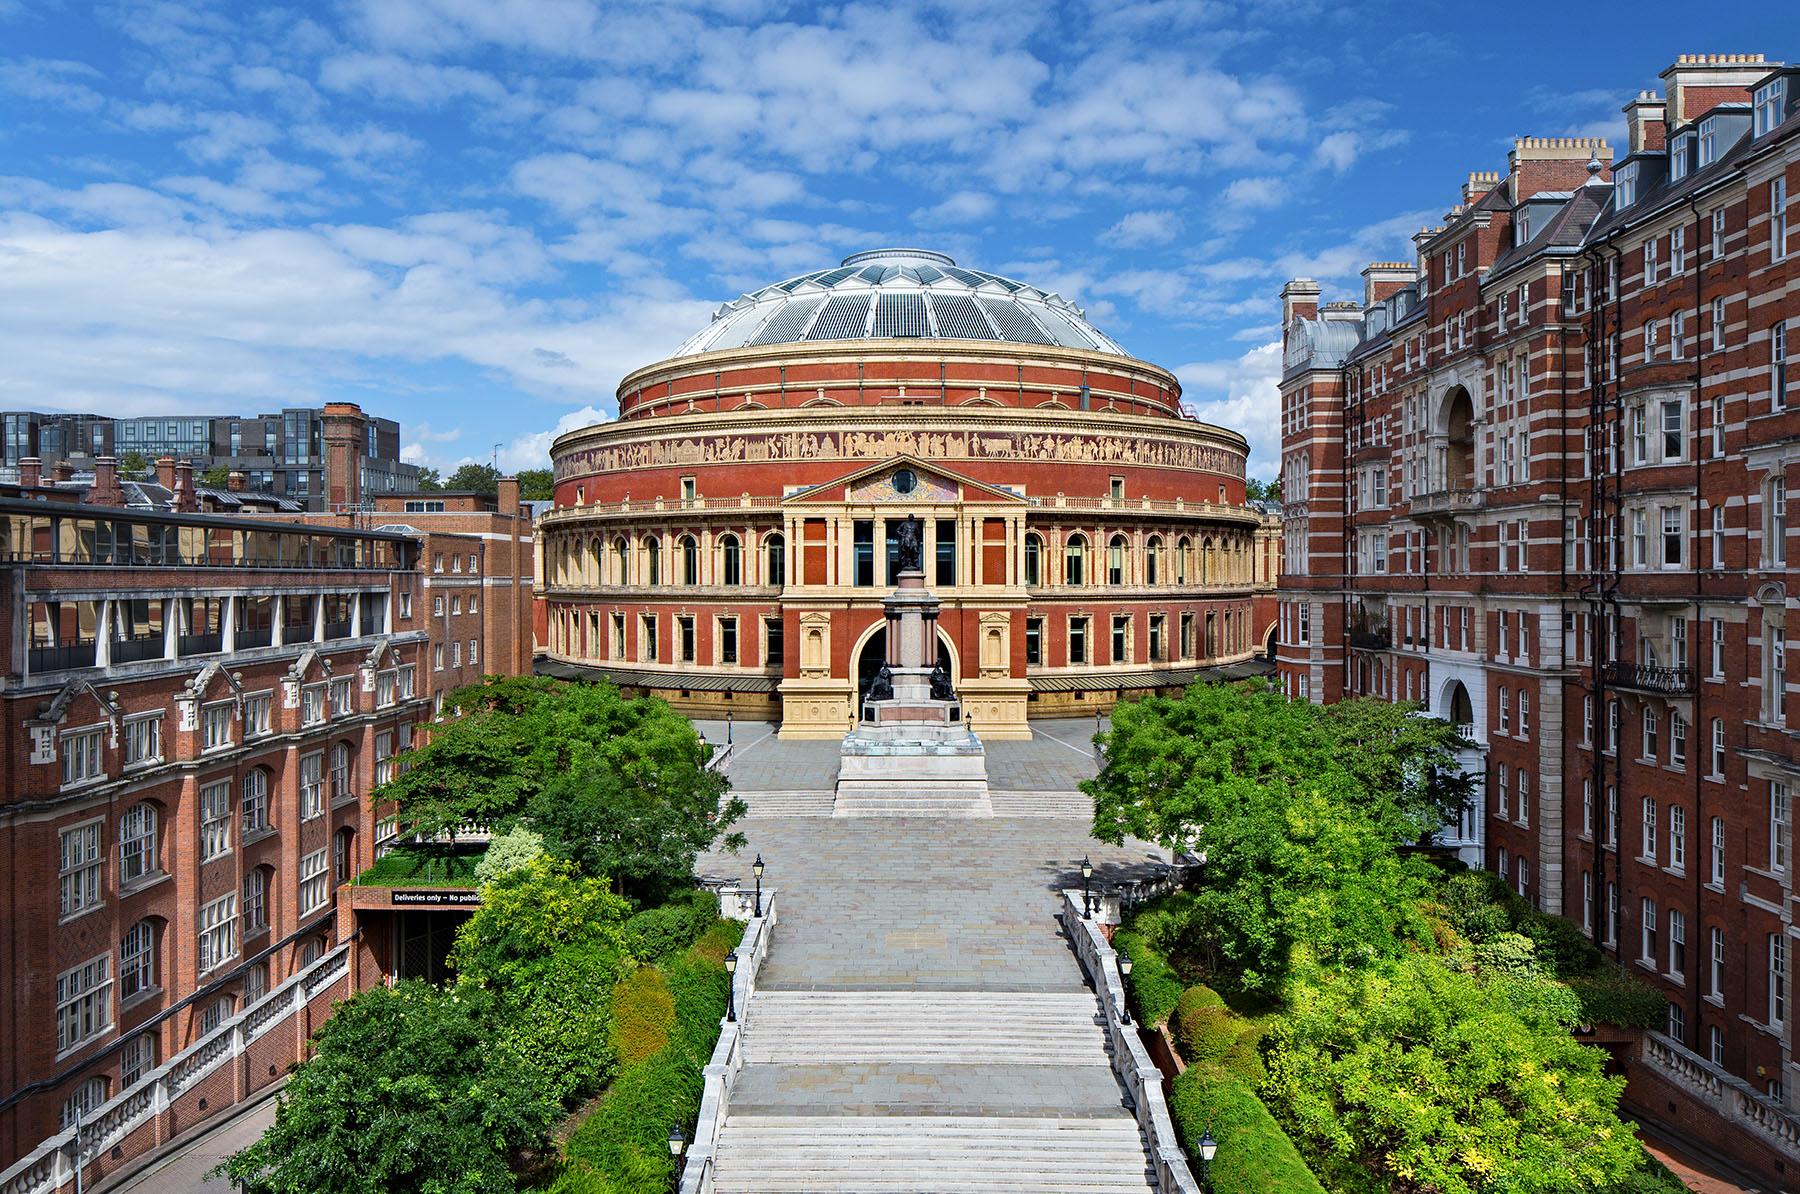 Marillion to play the Royal Albert Hall